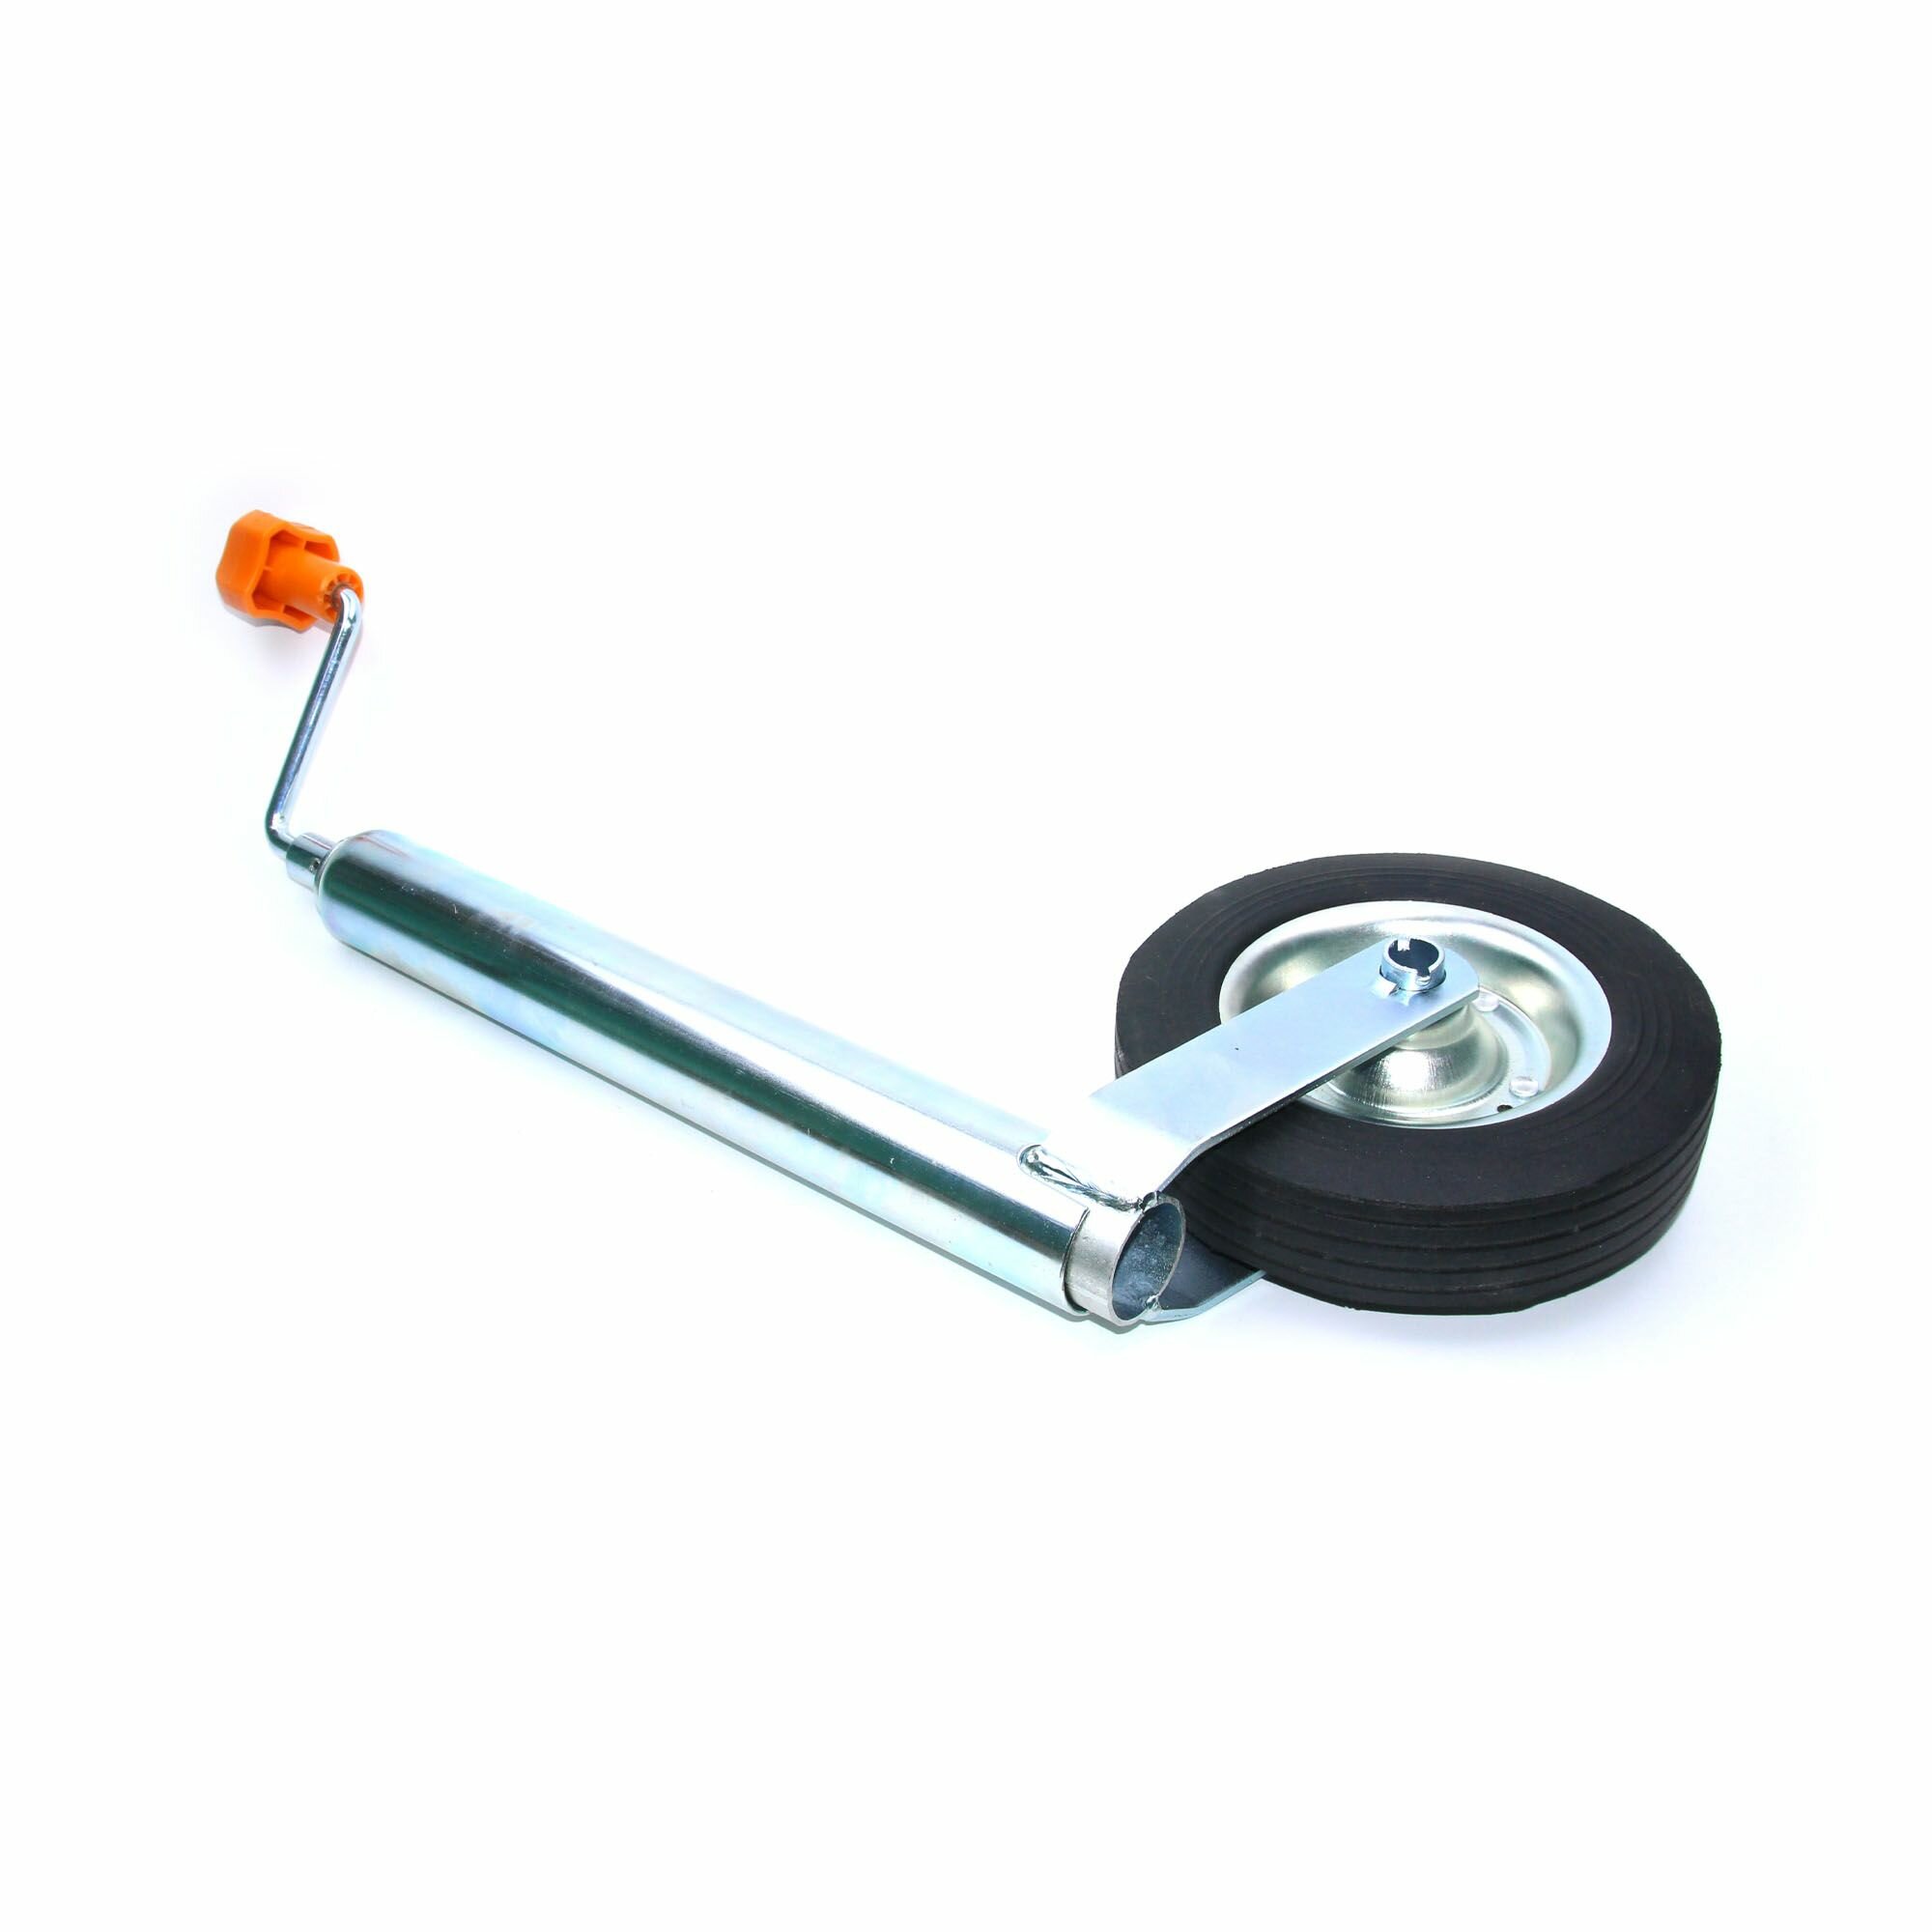 Опорное колесо 48 мм TRAILERCOM для прицепа (Orange)